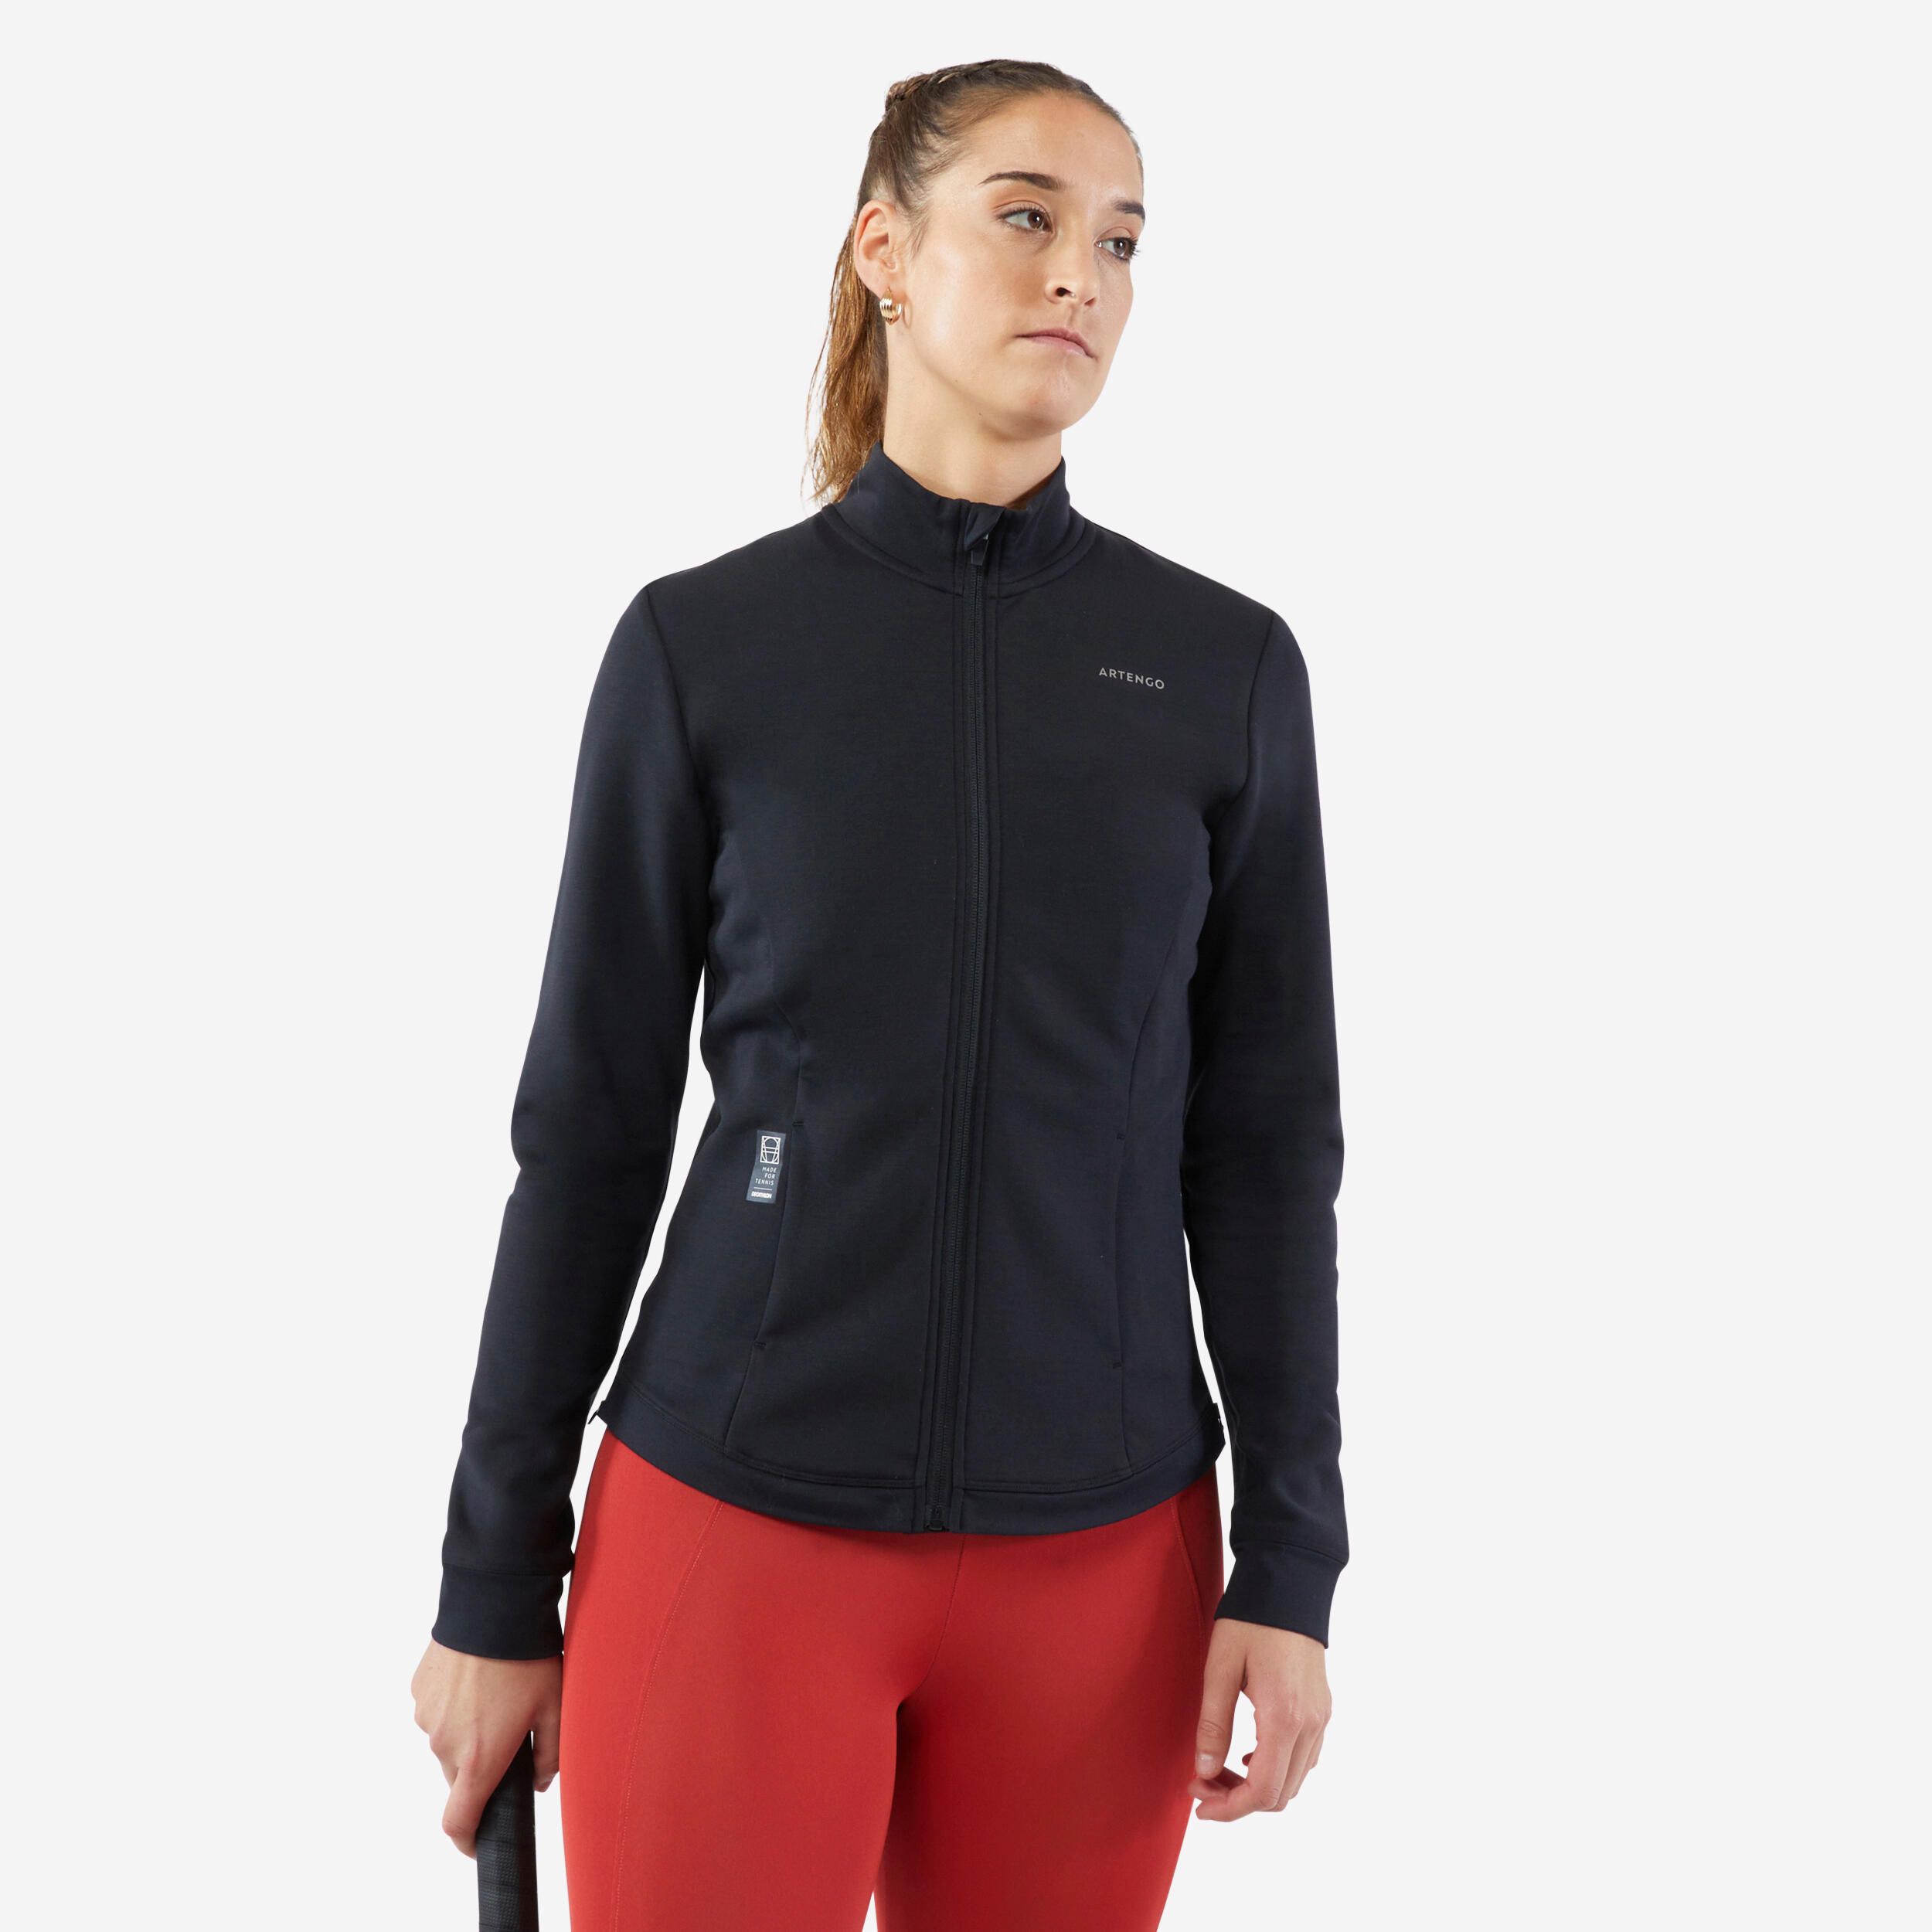 ARTENGO Women's Tennis Quick-Dry Soft Jacket Dry 900 - Black